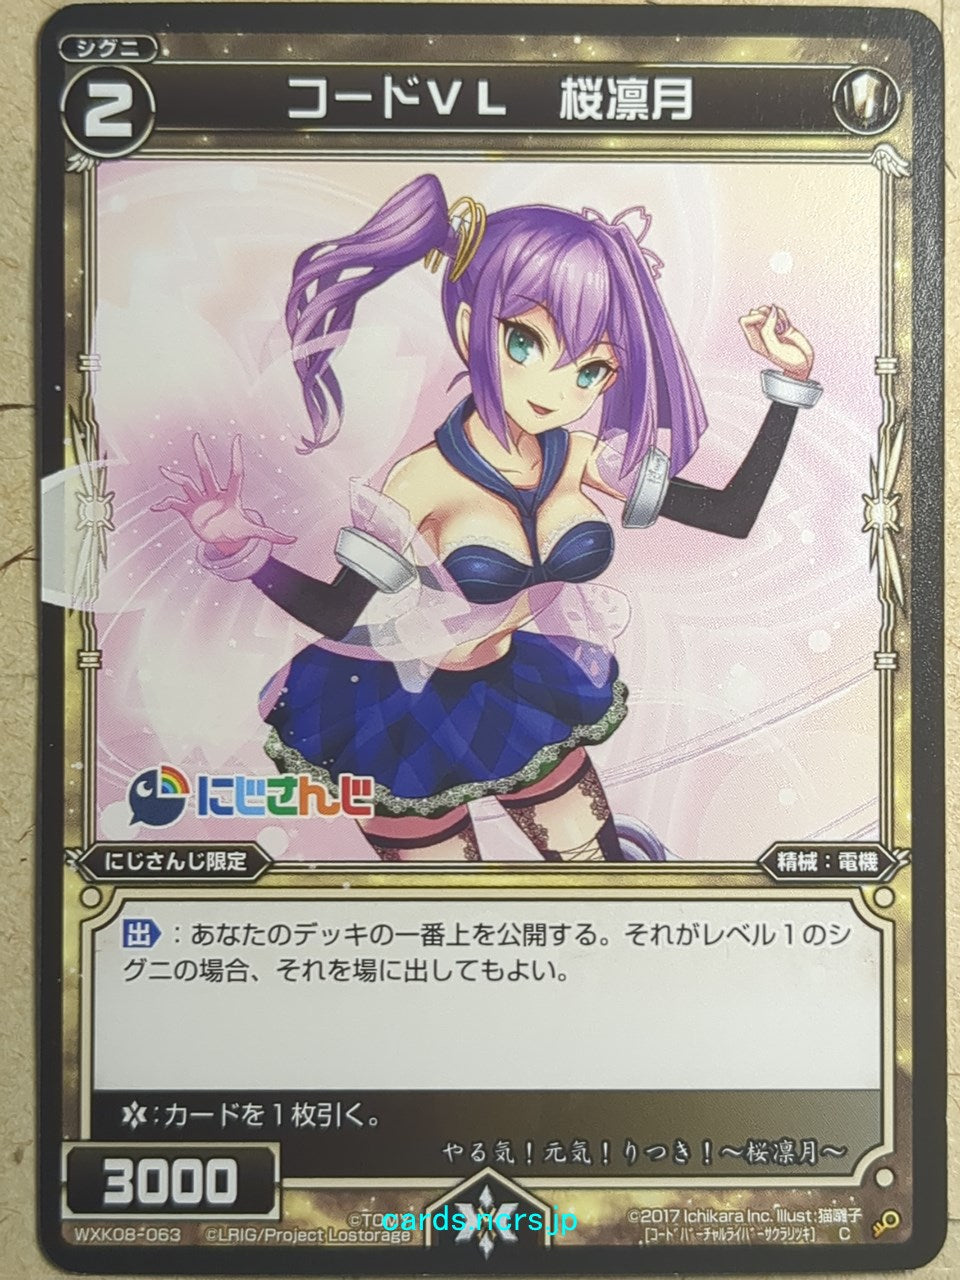 Wixoss Bk Nijisanji -Ritsuki Sakura- Code VL Trading Card WXK08 